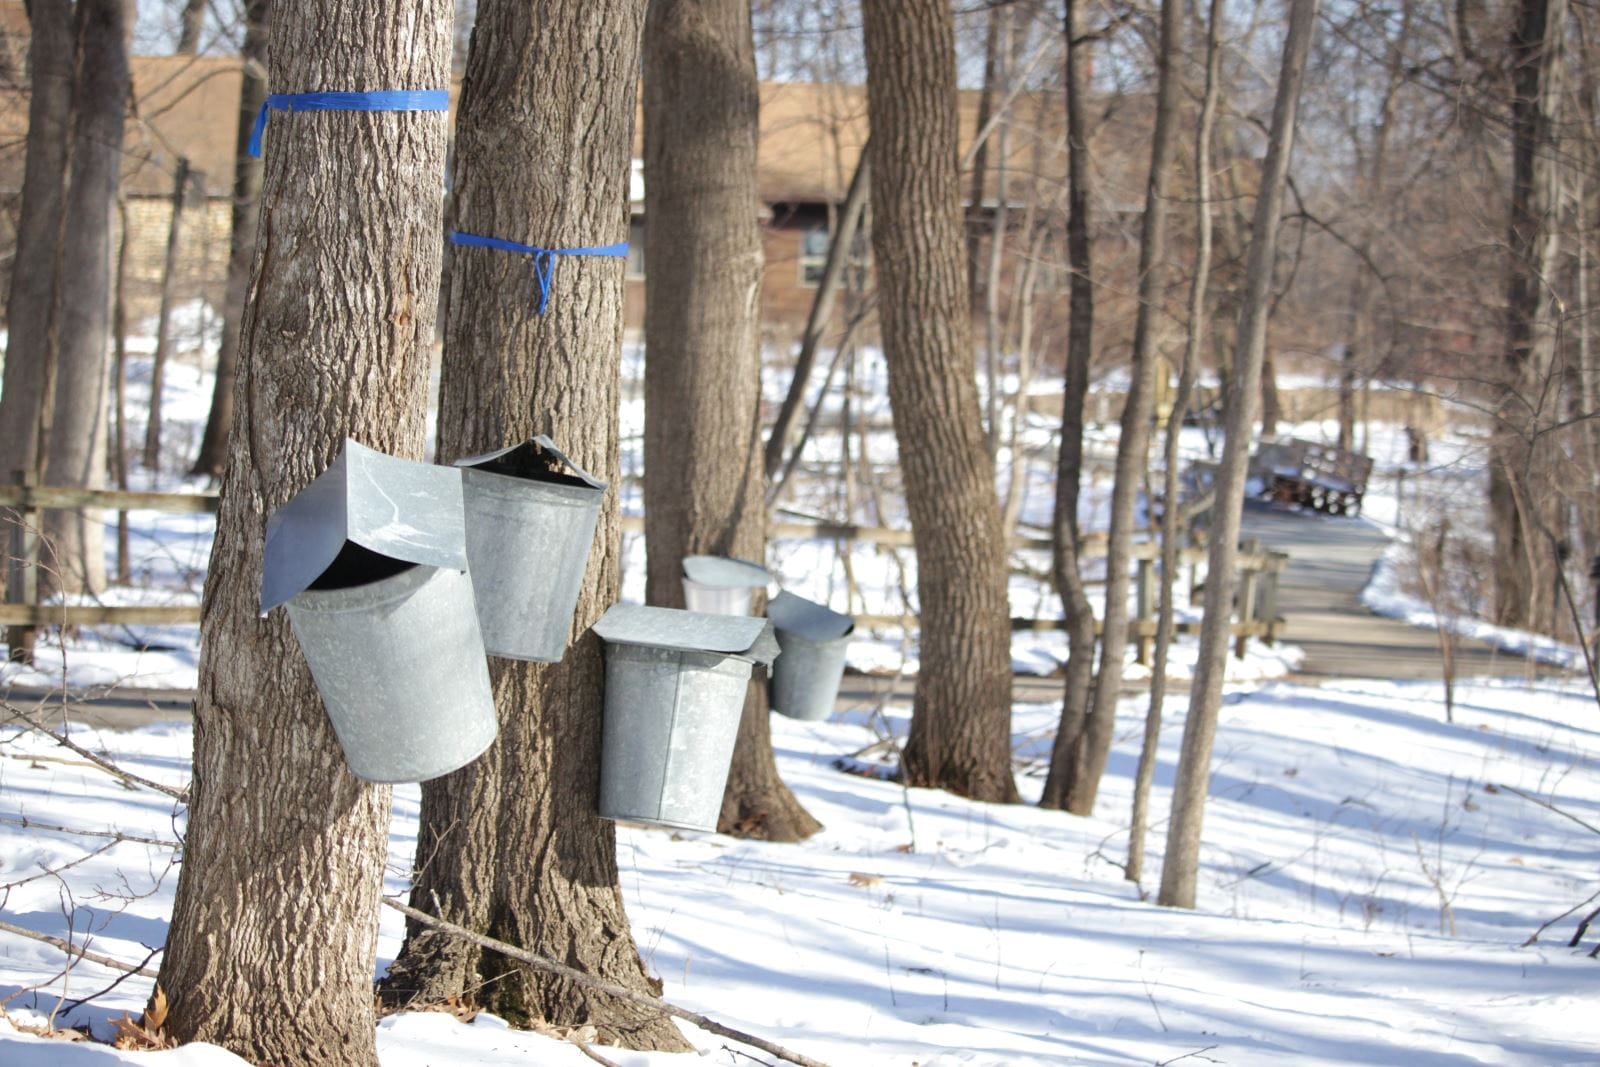 Maple Syrup Festival, sap buckets | Winter Activities Blog | Cedar Falls, Iowa